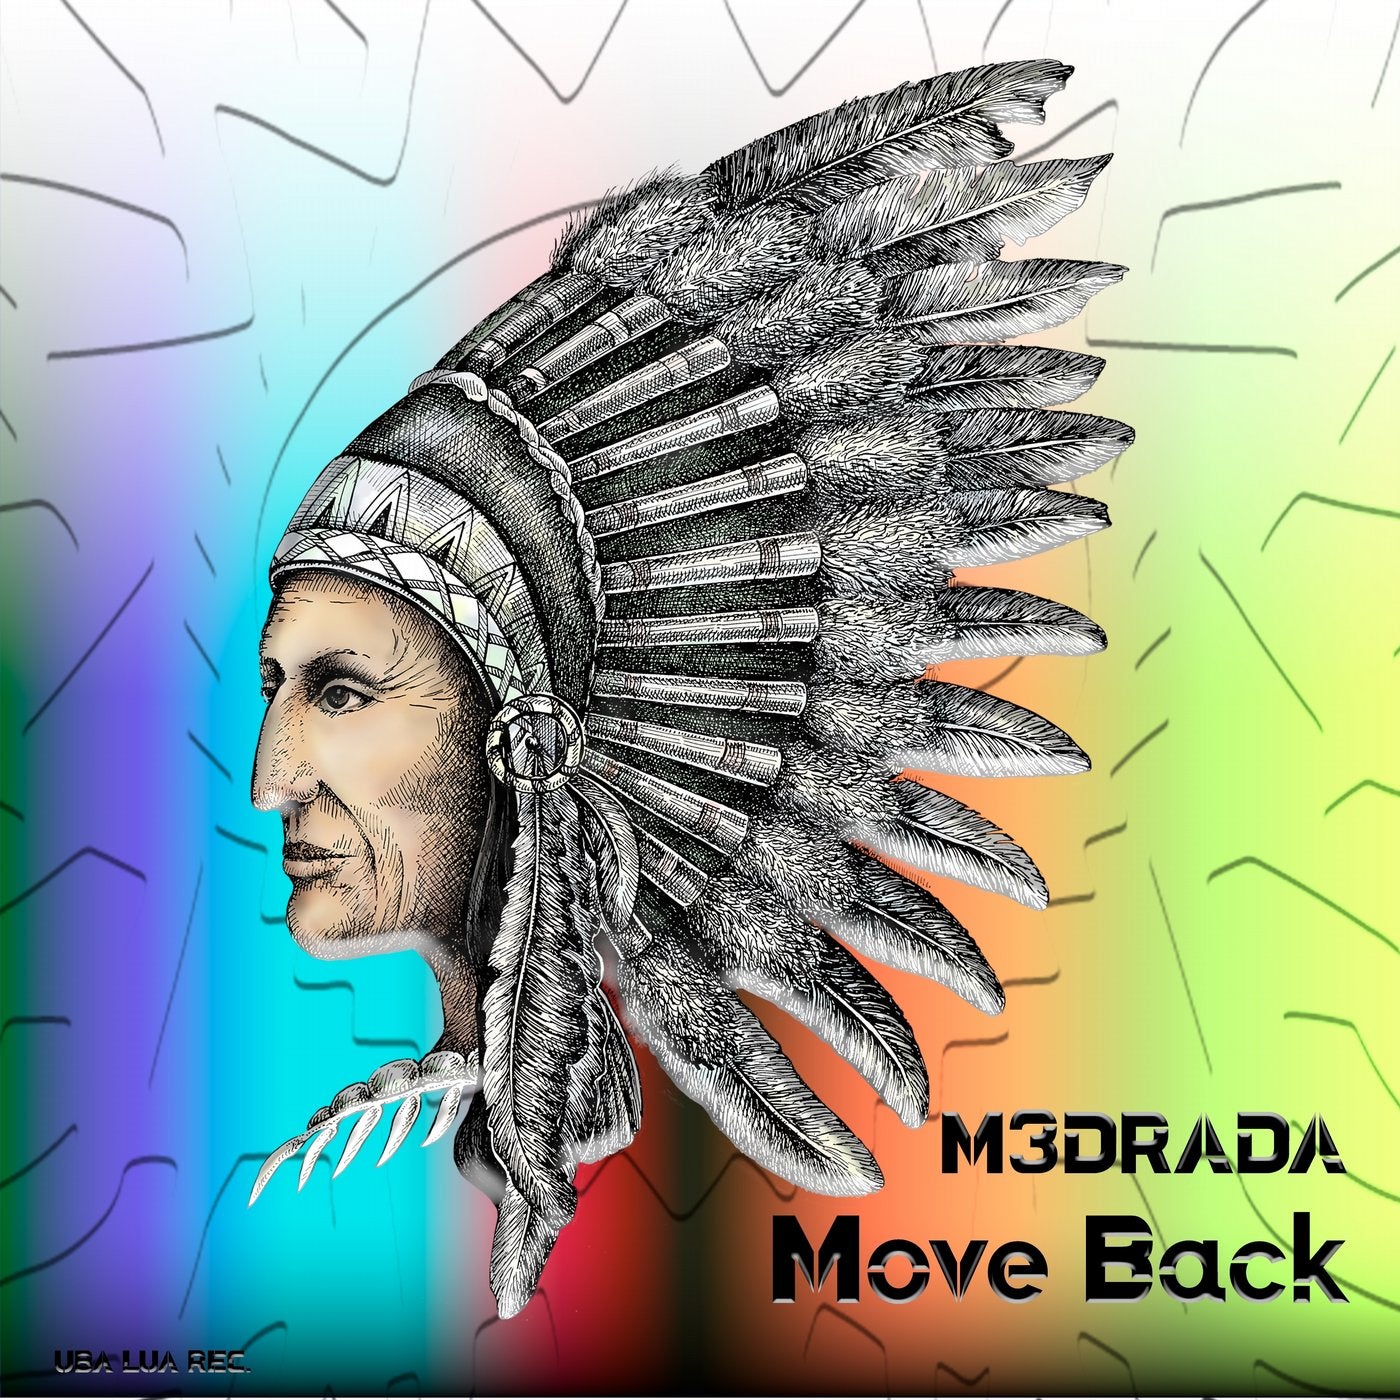 Move Back